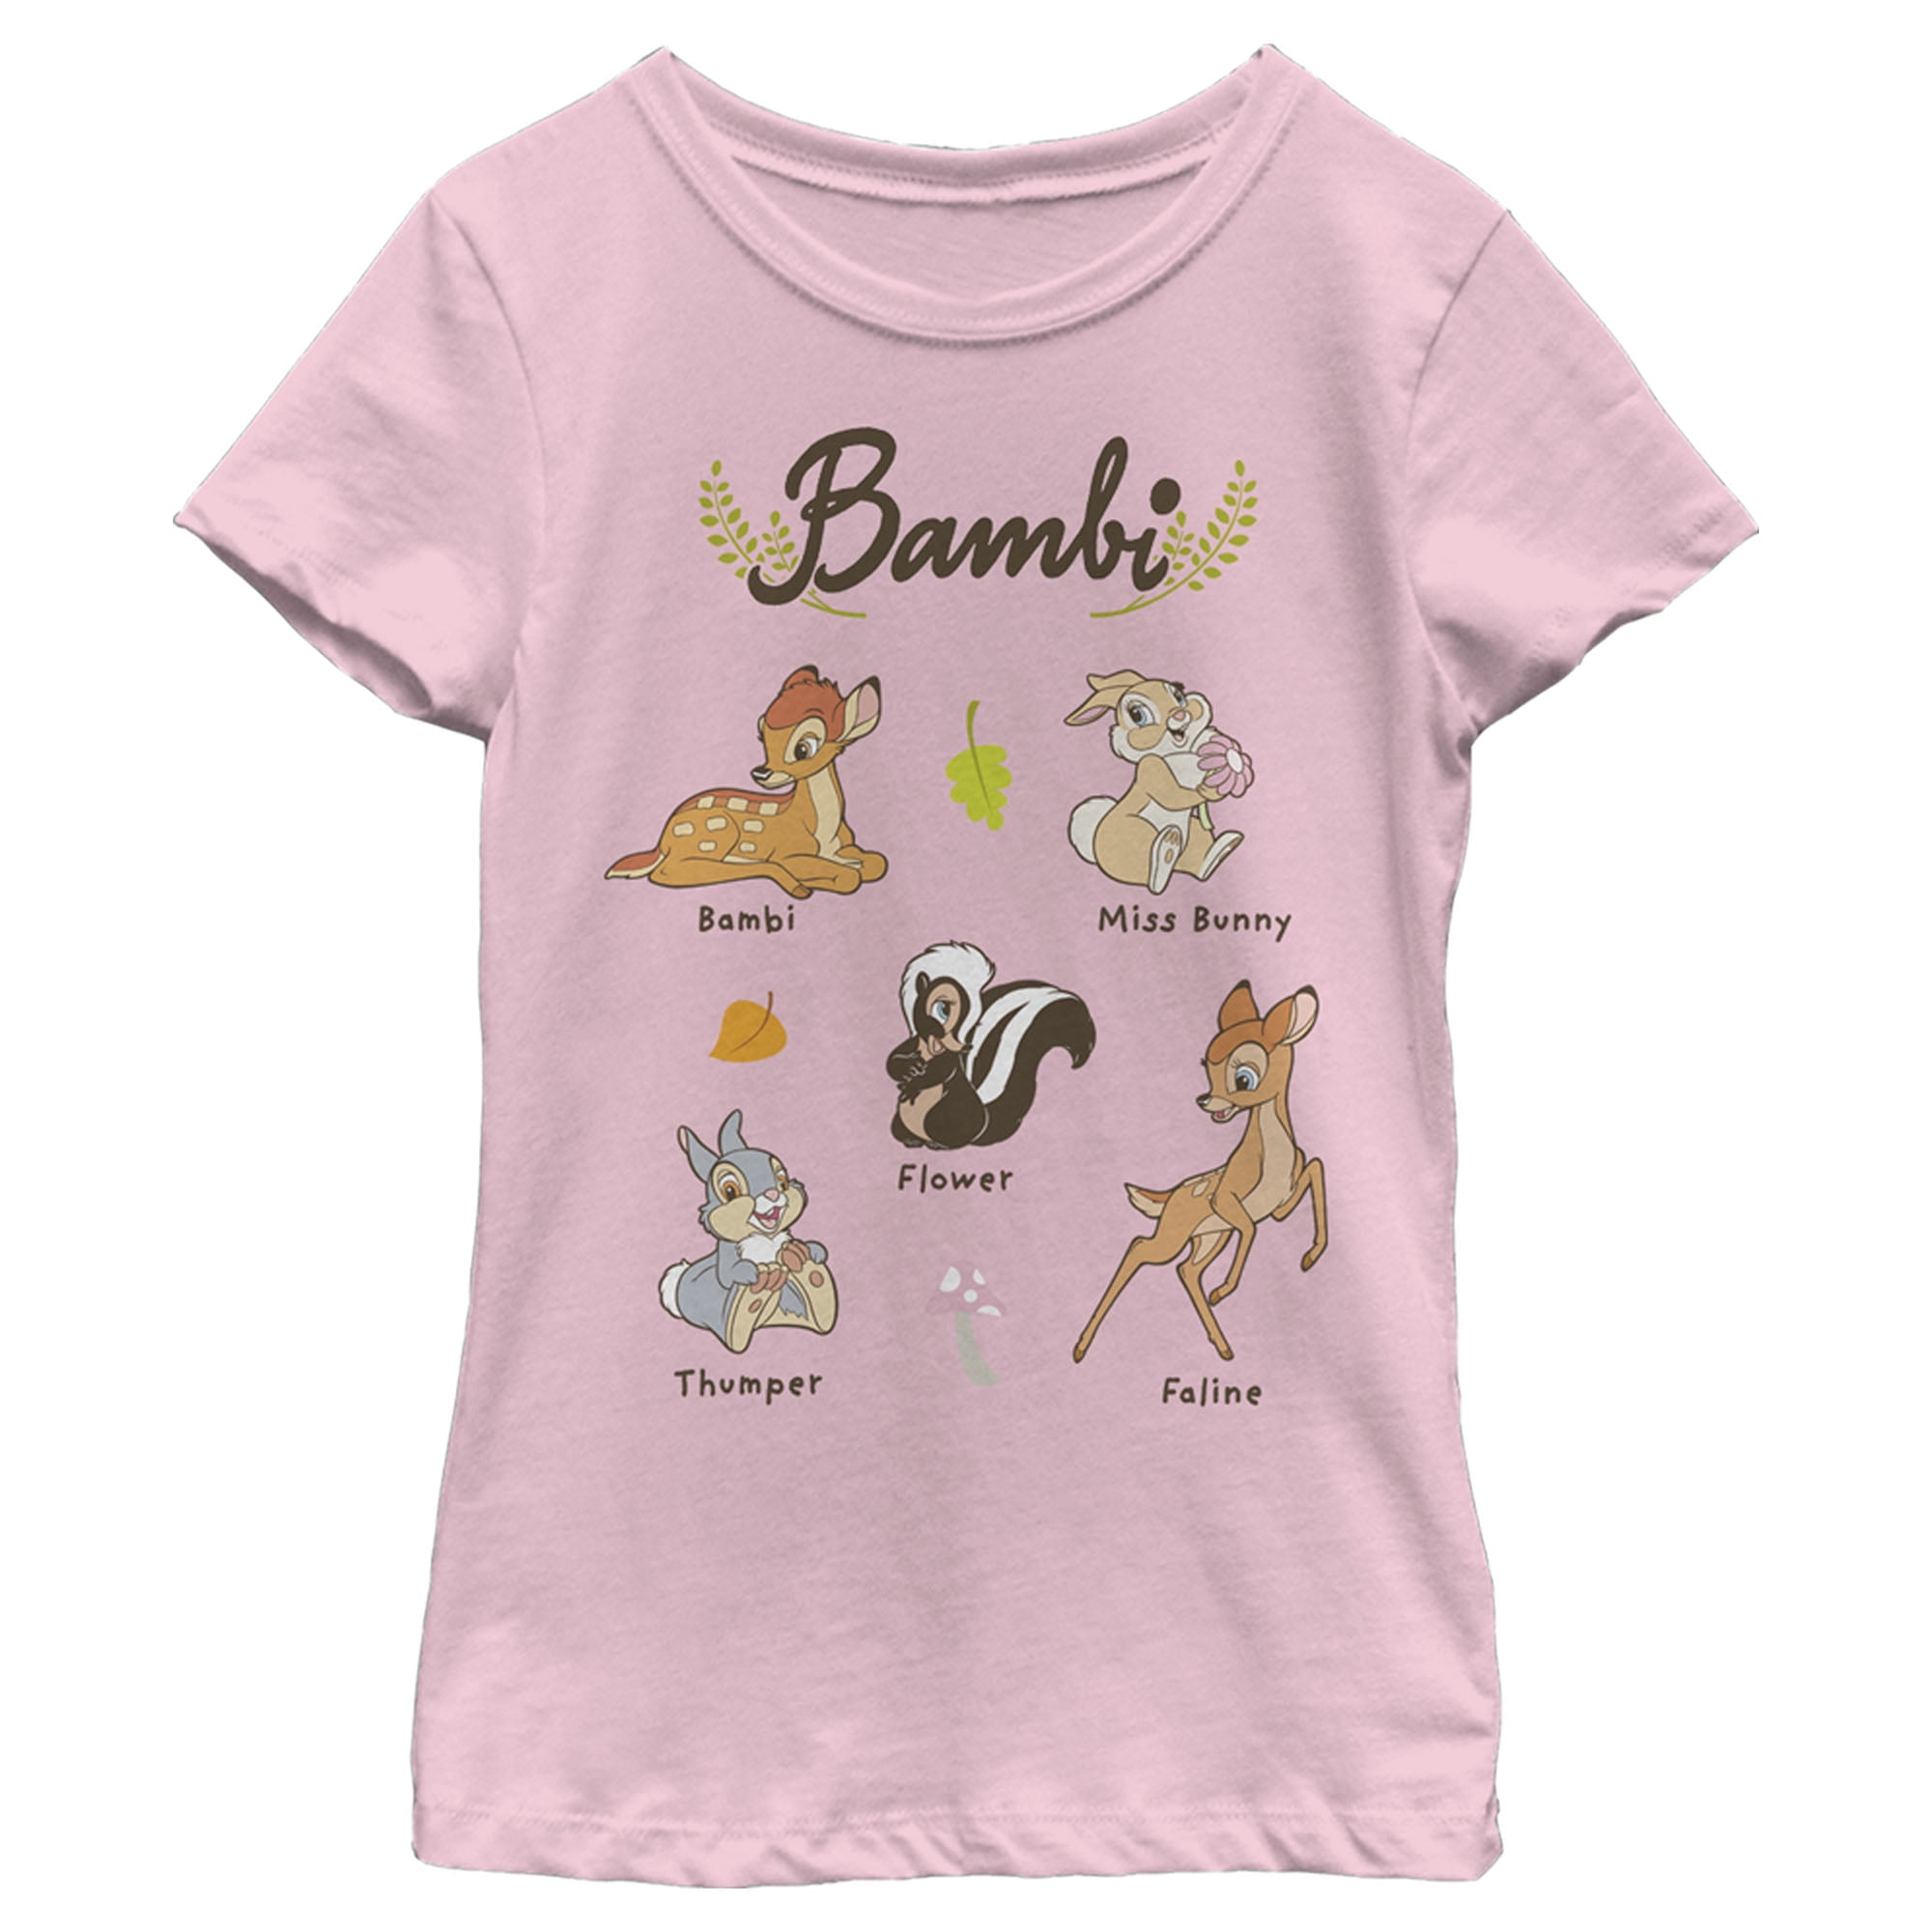 Girl's Bambi Character Names Graphic Tee Light Pink Small